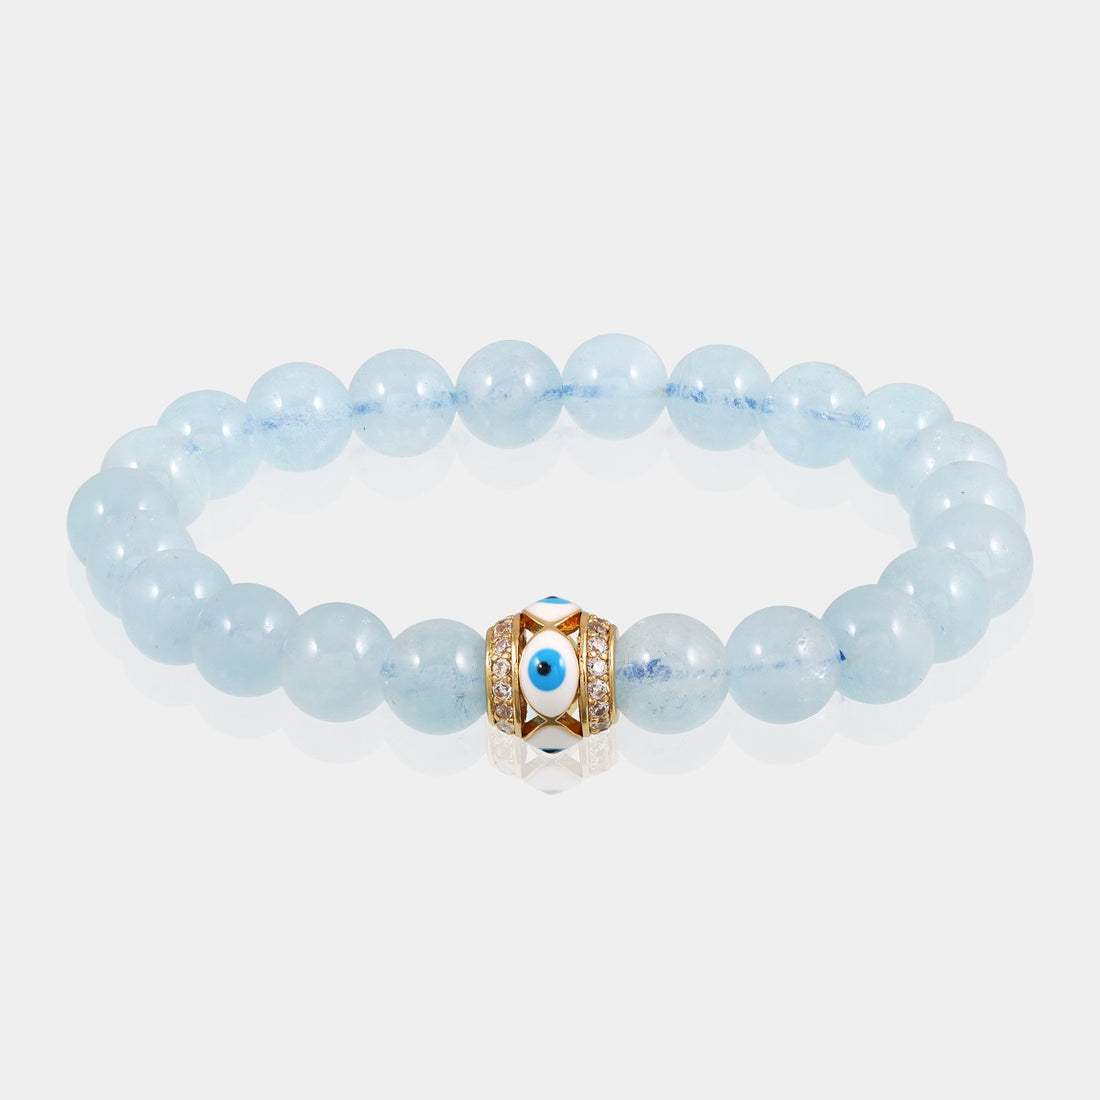 Close-up of smooth round Aquamarine gemstone beads in serene blue color.